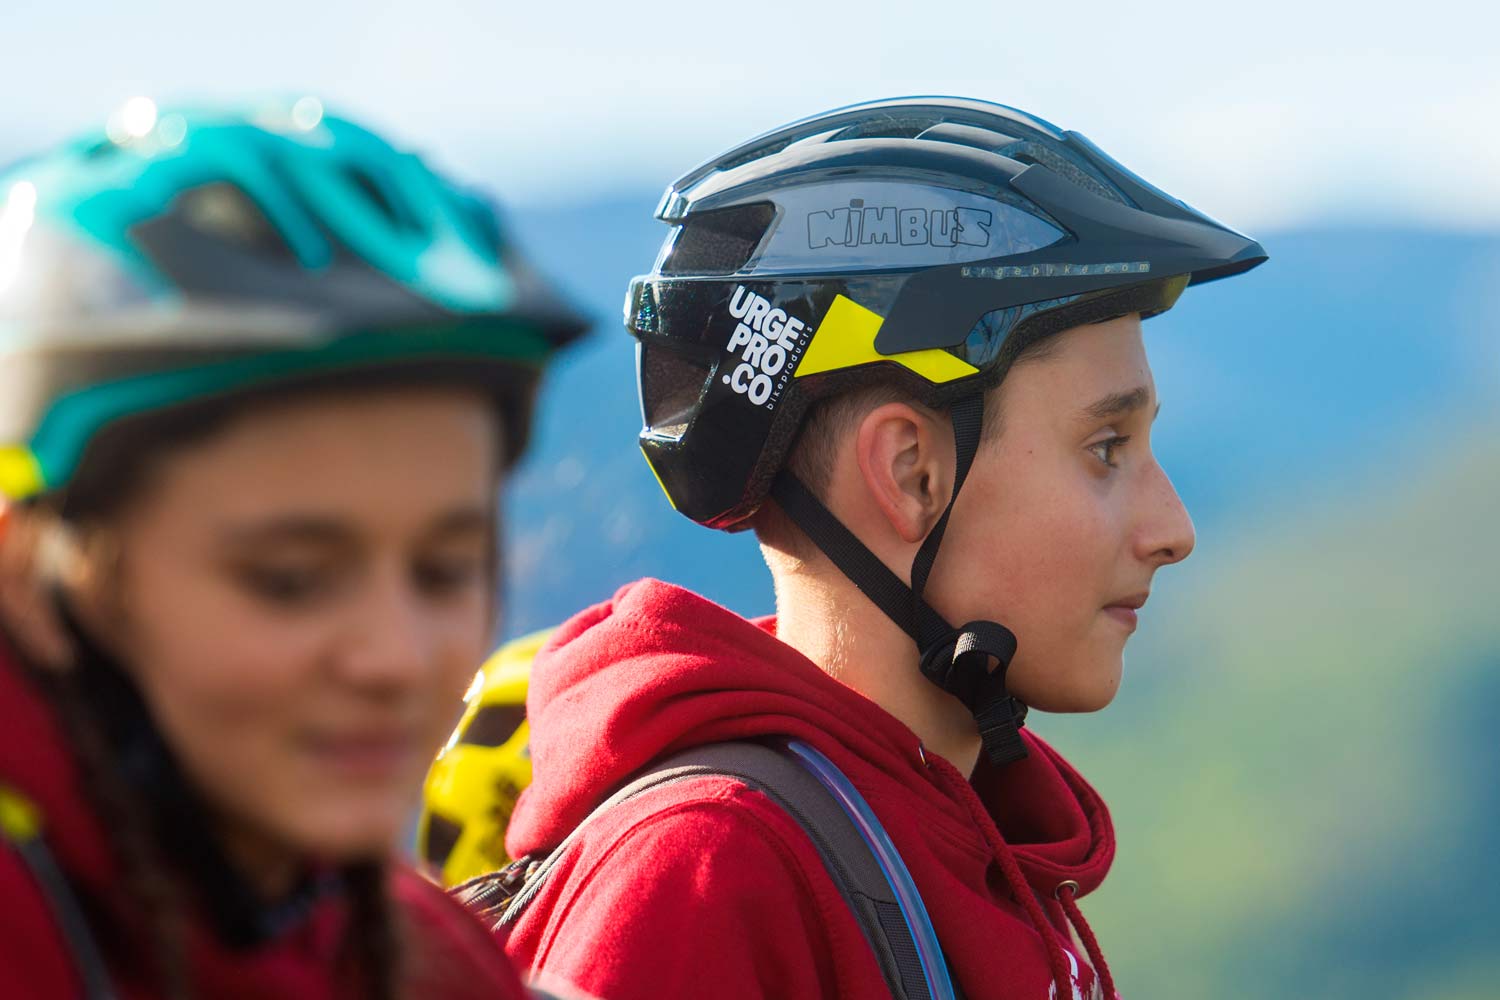 Urge Nimbus kids MTB helmet, affordable child-sized eco-friendly all-trail all-mountain bike head protection, profile